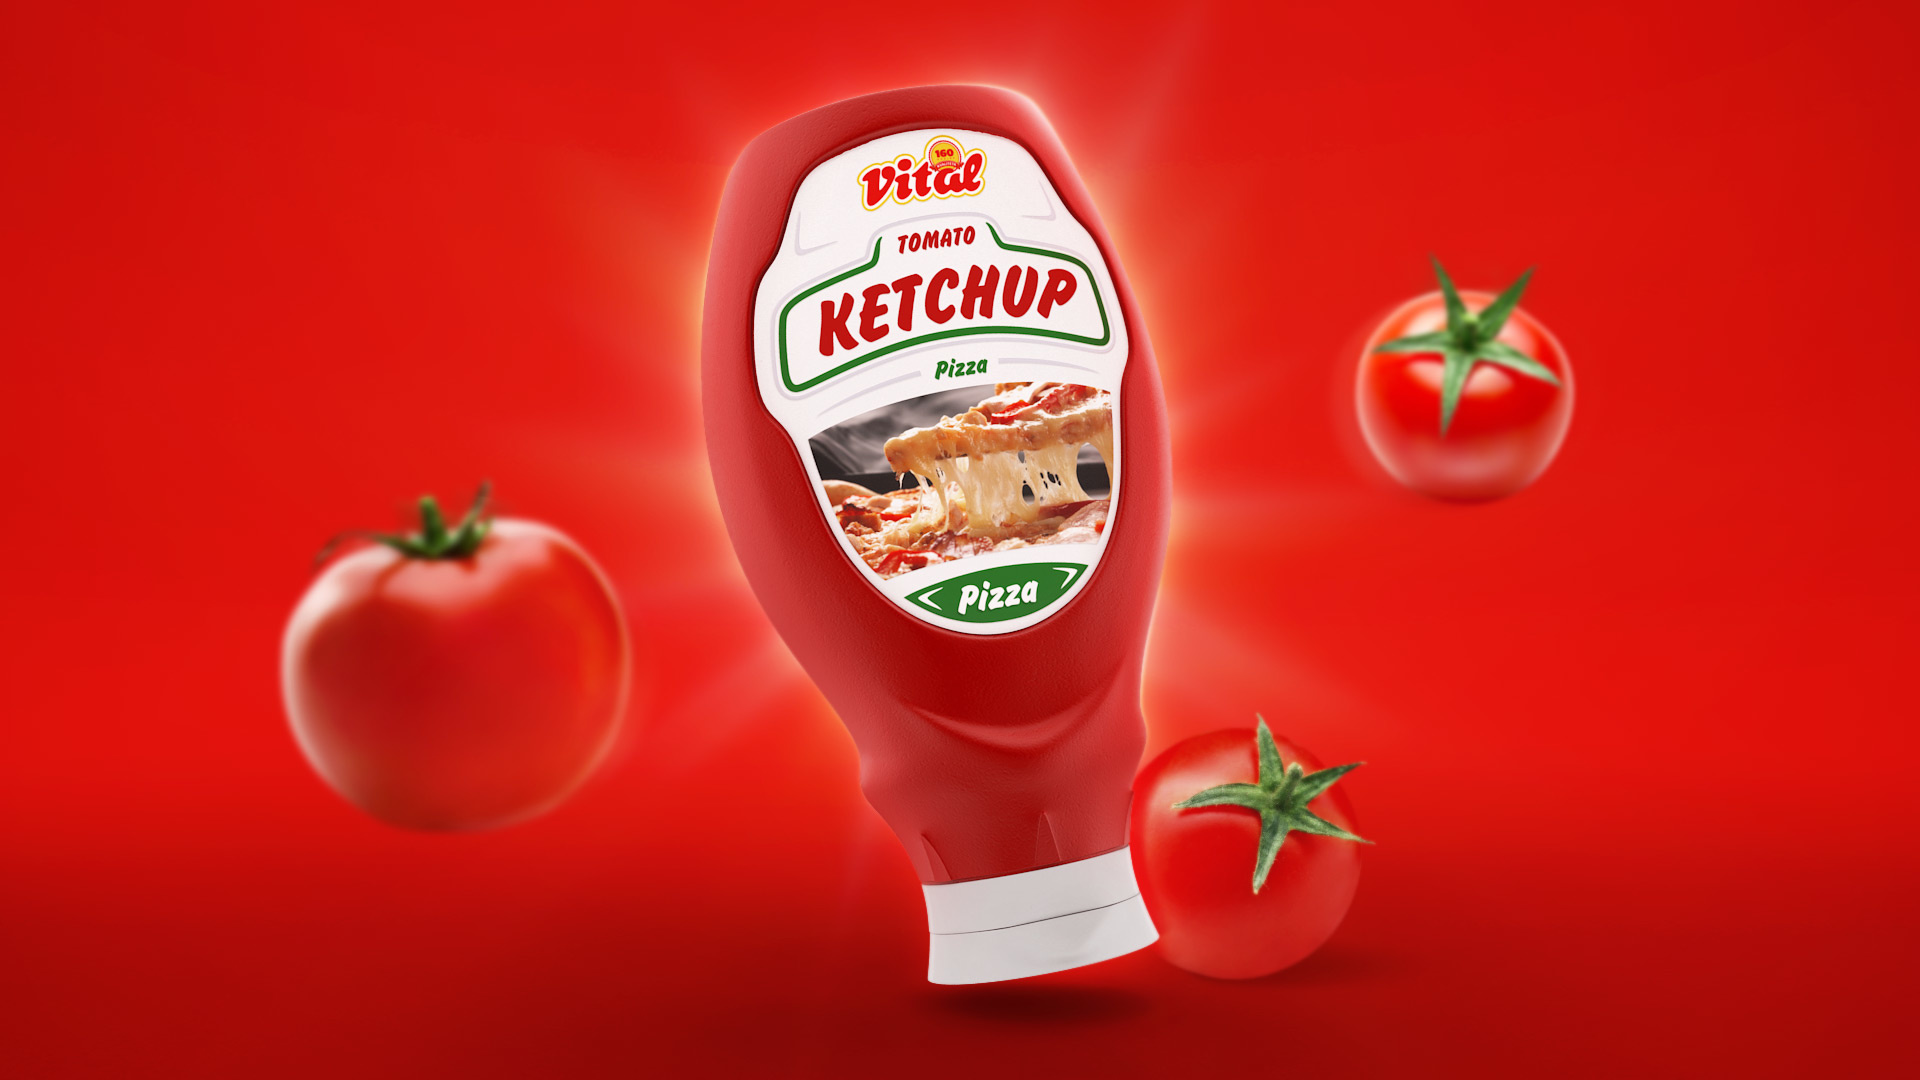 Tomato ketchup. Кетчуп. Реклама кетчупа. Кетчуп этикетка. Кетчуп из рекламы.